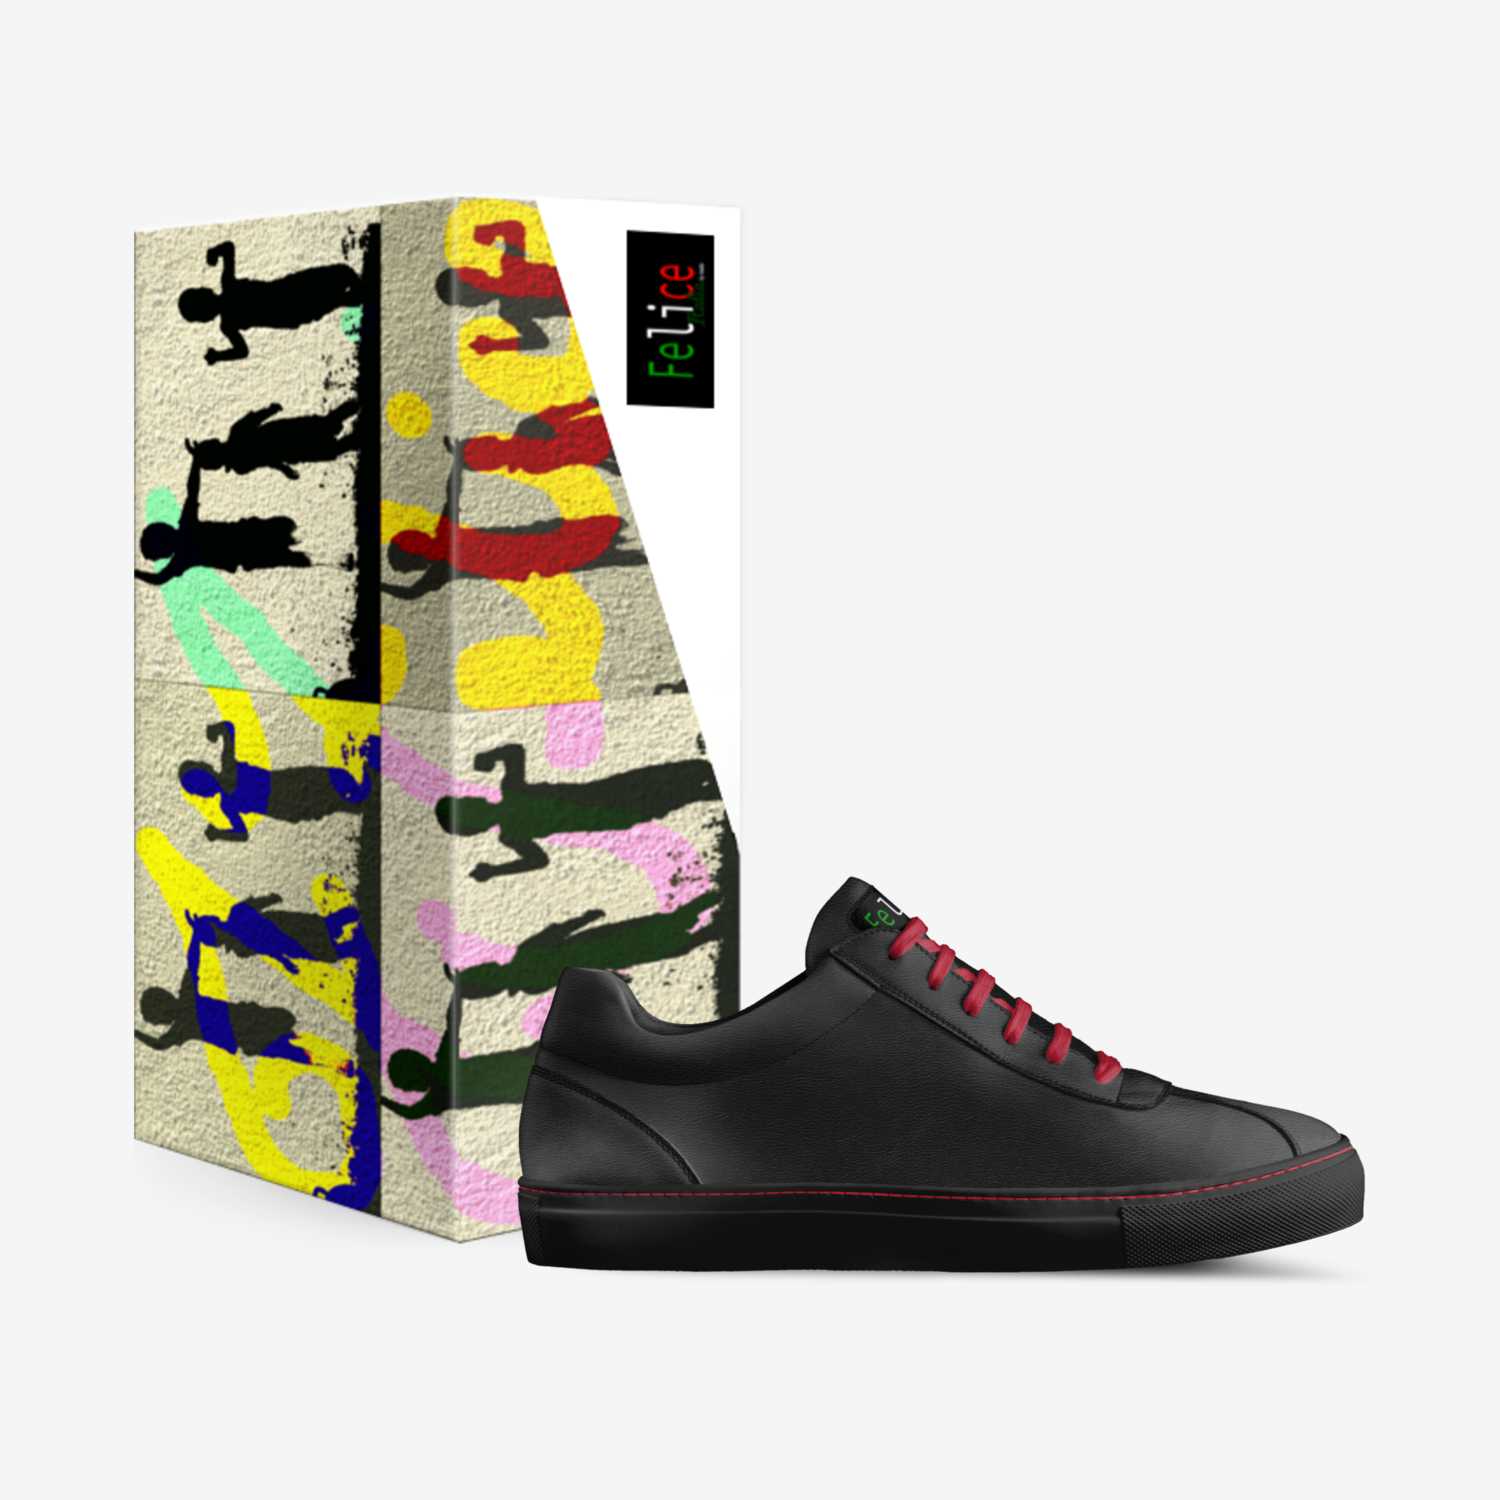 Felice Italia custom made in Italy shoes by Malik O'Neal | Box view